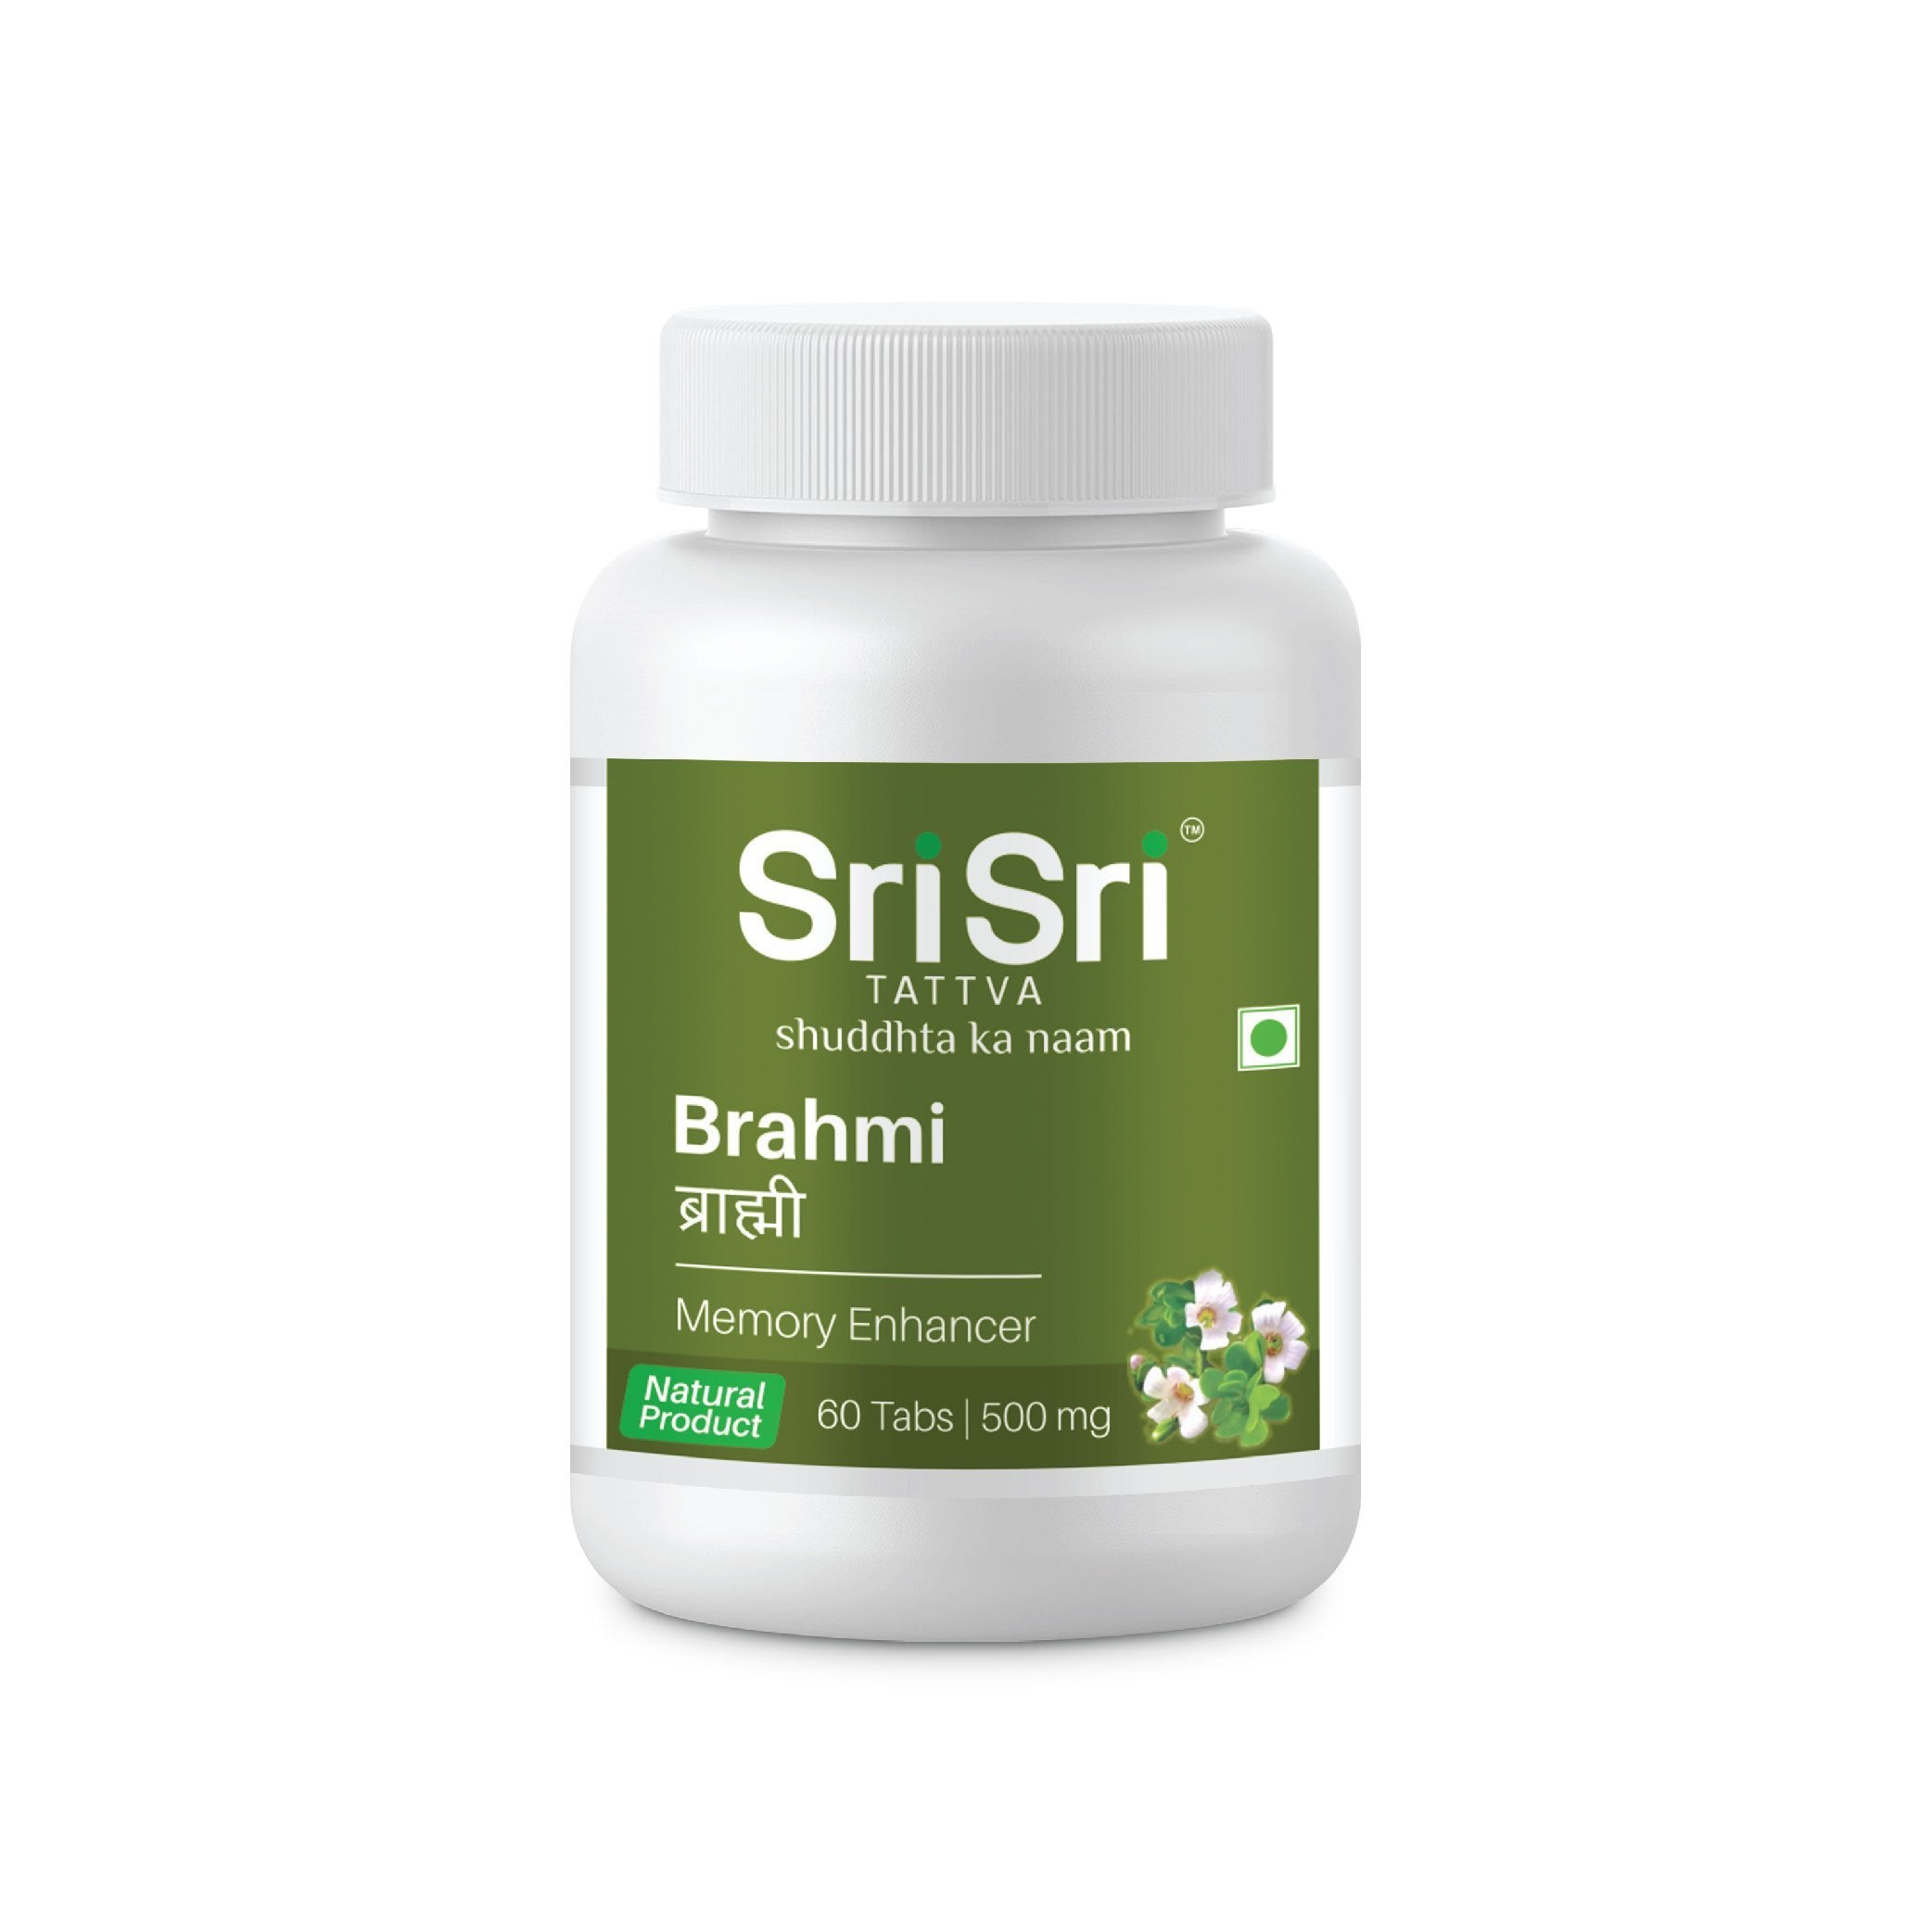 Brahmi - Memory Enhancer, 60 Tabs | 500mg - Sri Sri Tattva